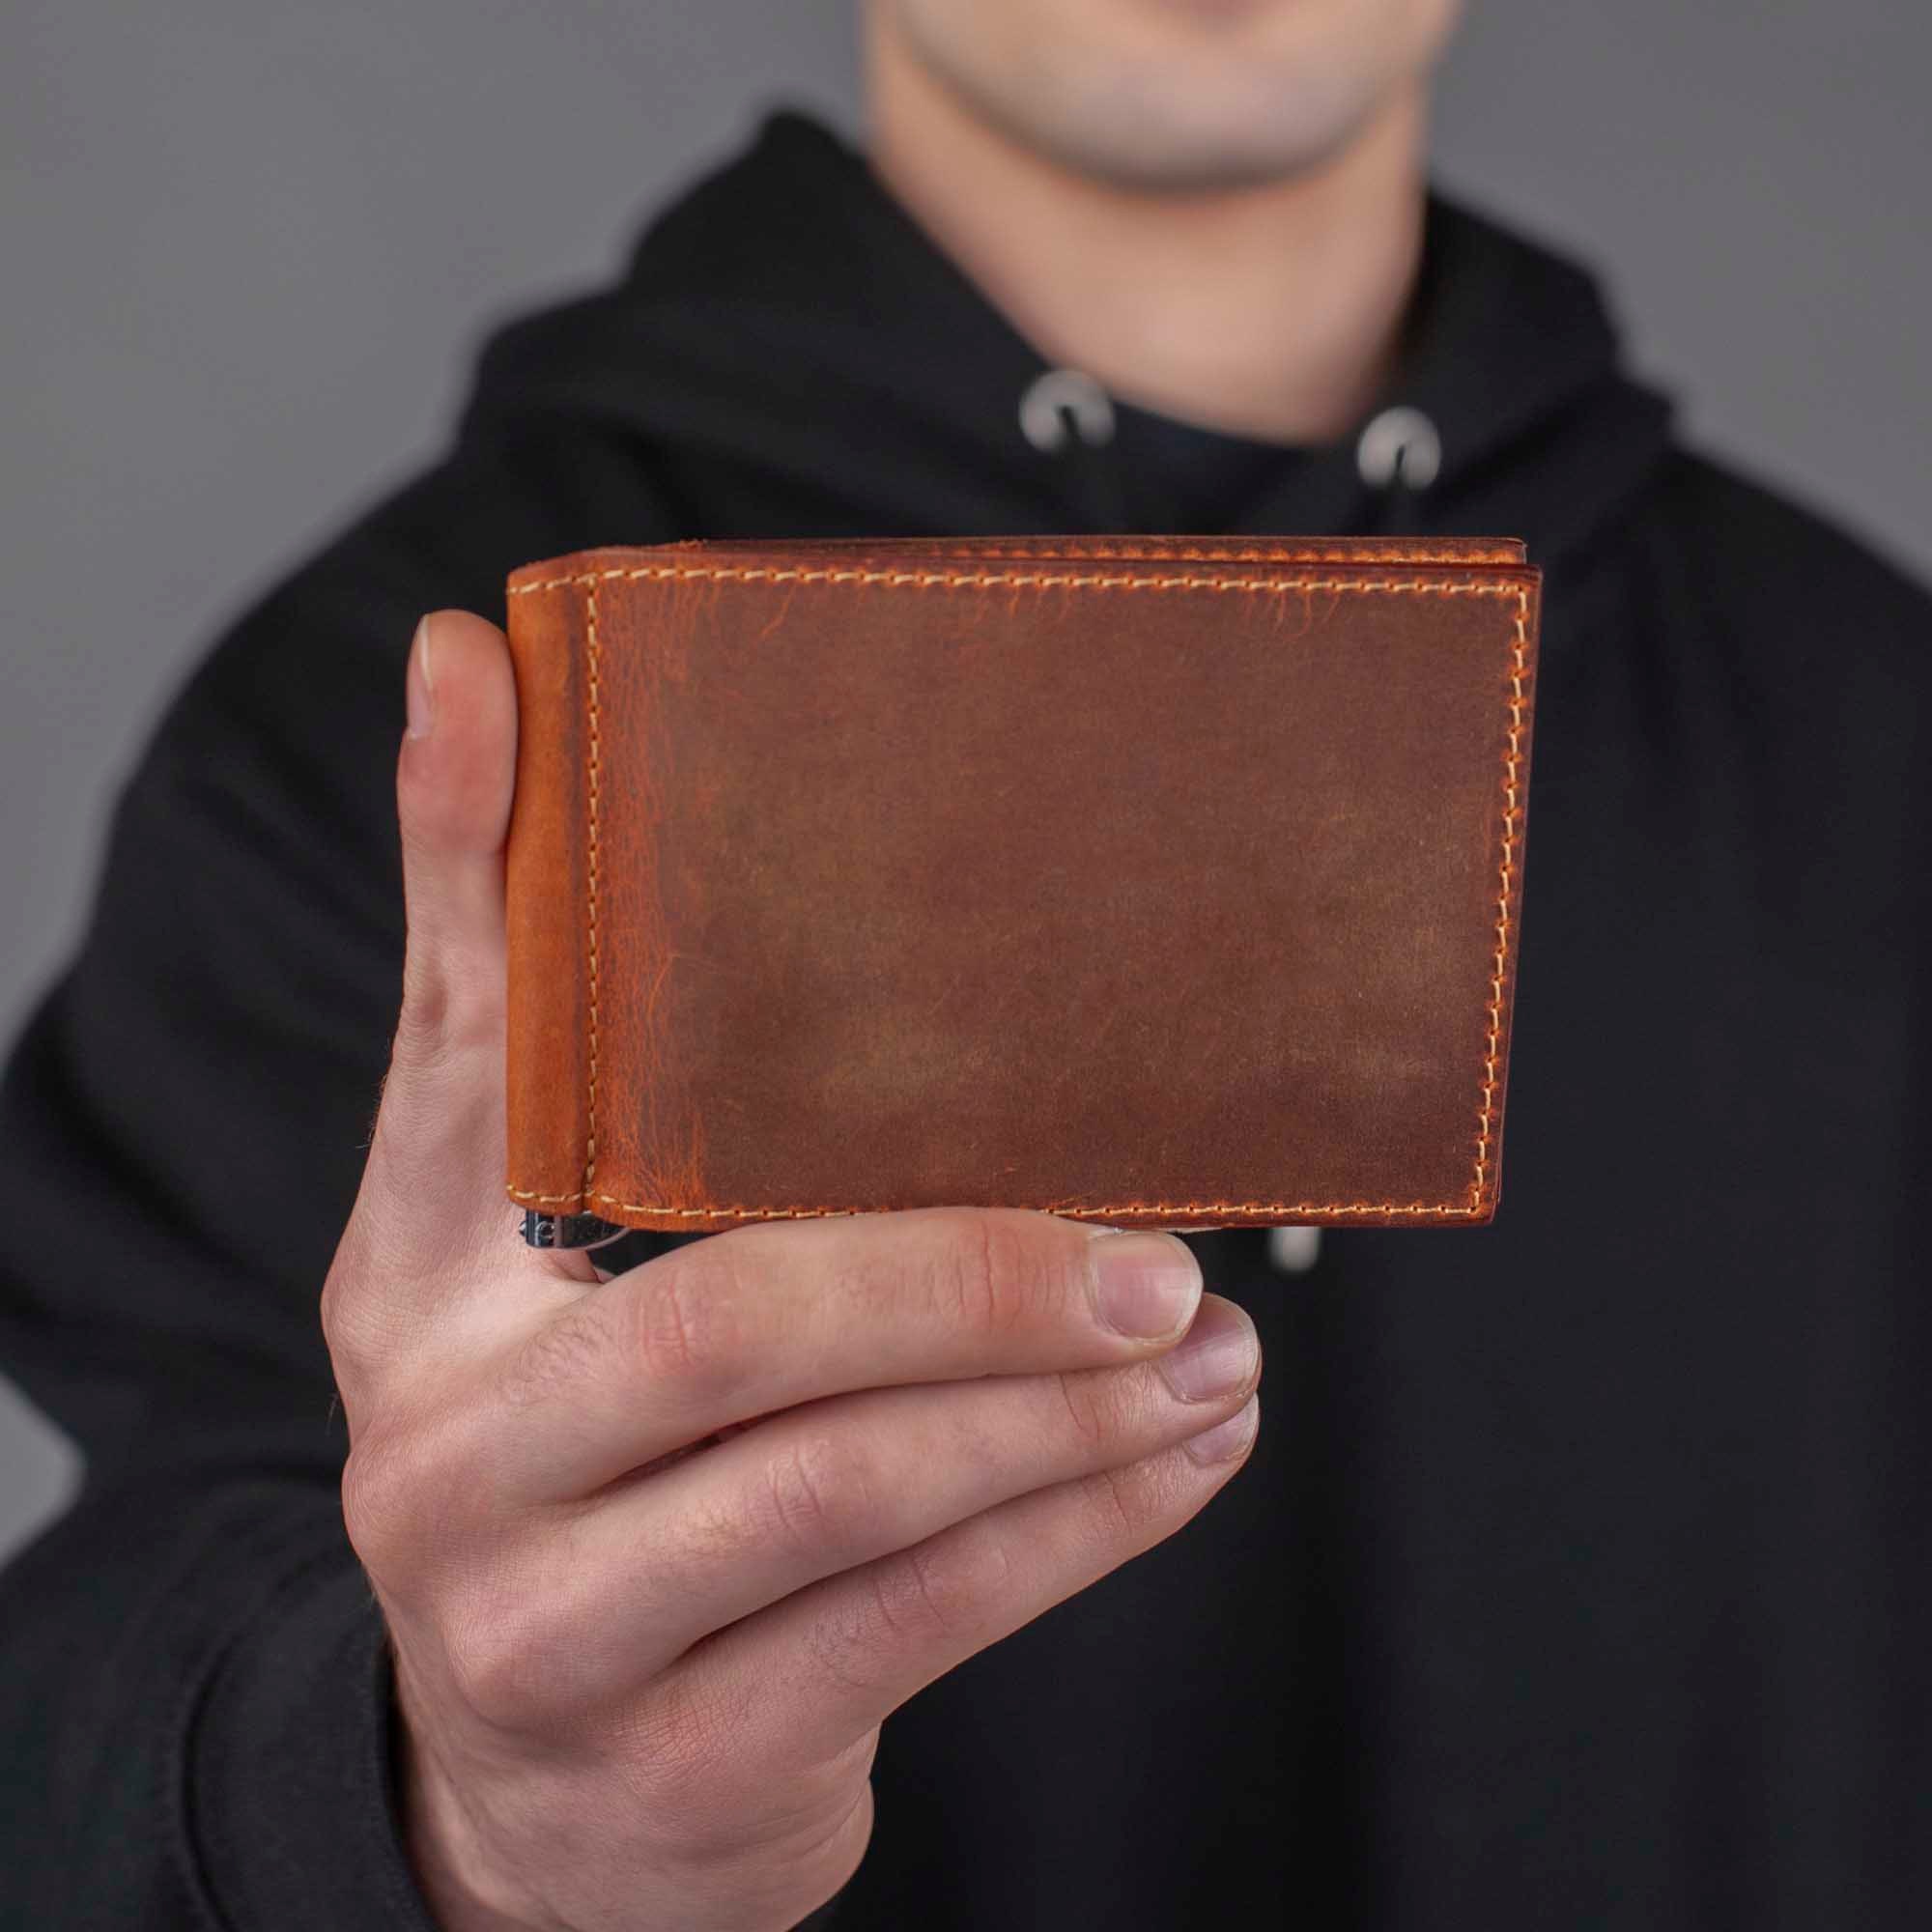 Slim mens wallet, leather wallet, cool groomsmen gift, mens leather wallet,  leather wallet mens, wallet men, Wallet with Money Clips